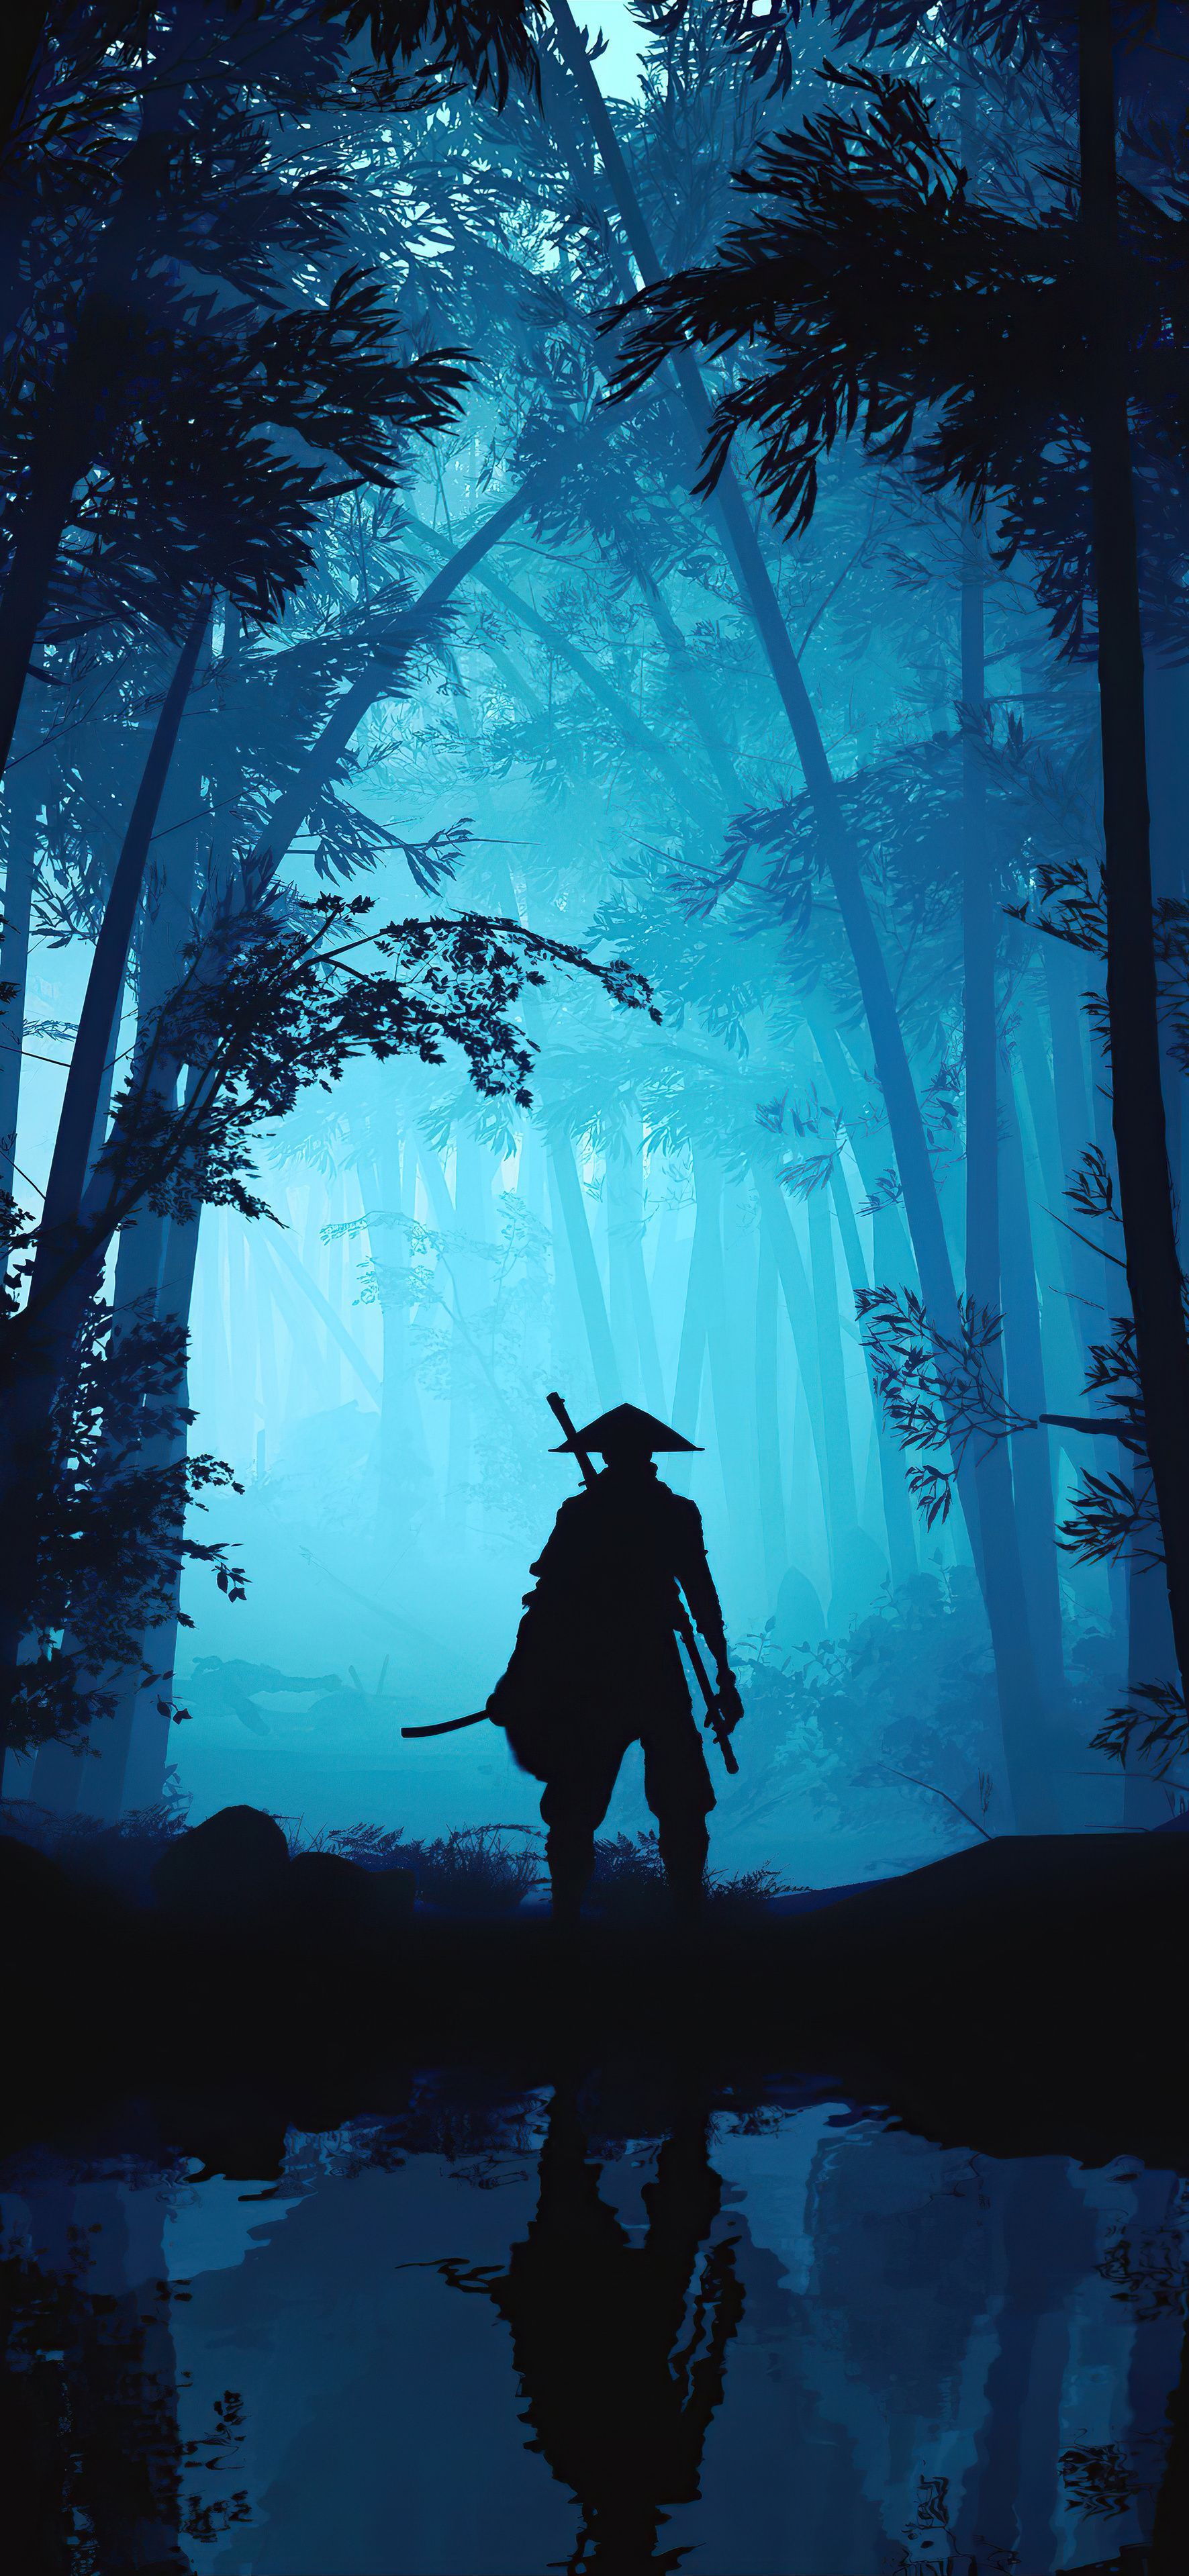 Samurai in the forest wallpaper 1440x2560 for android - Samurai